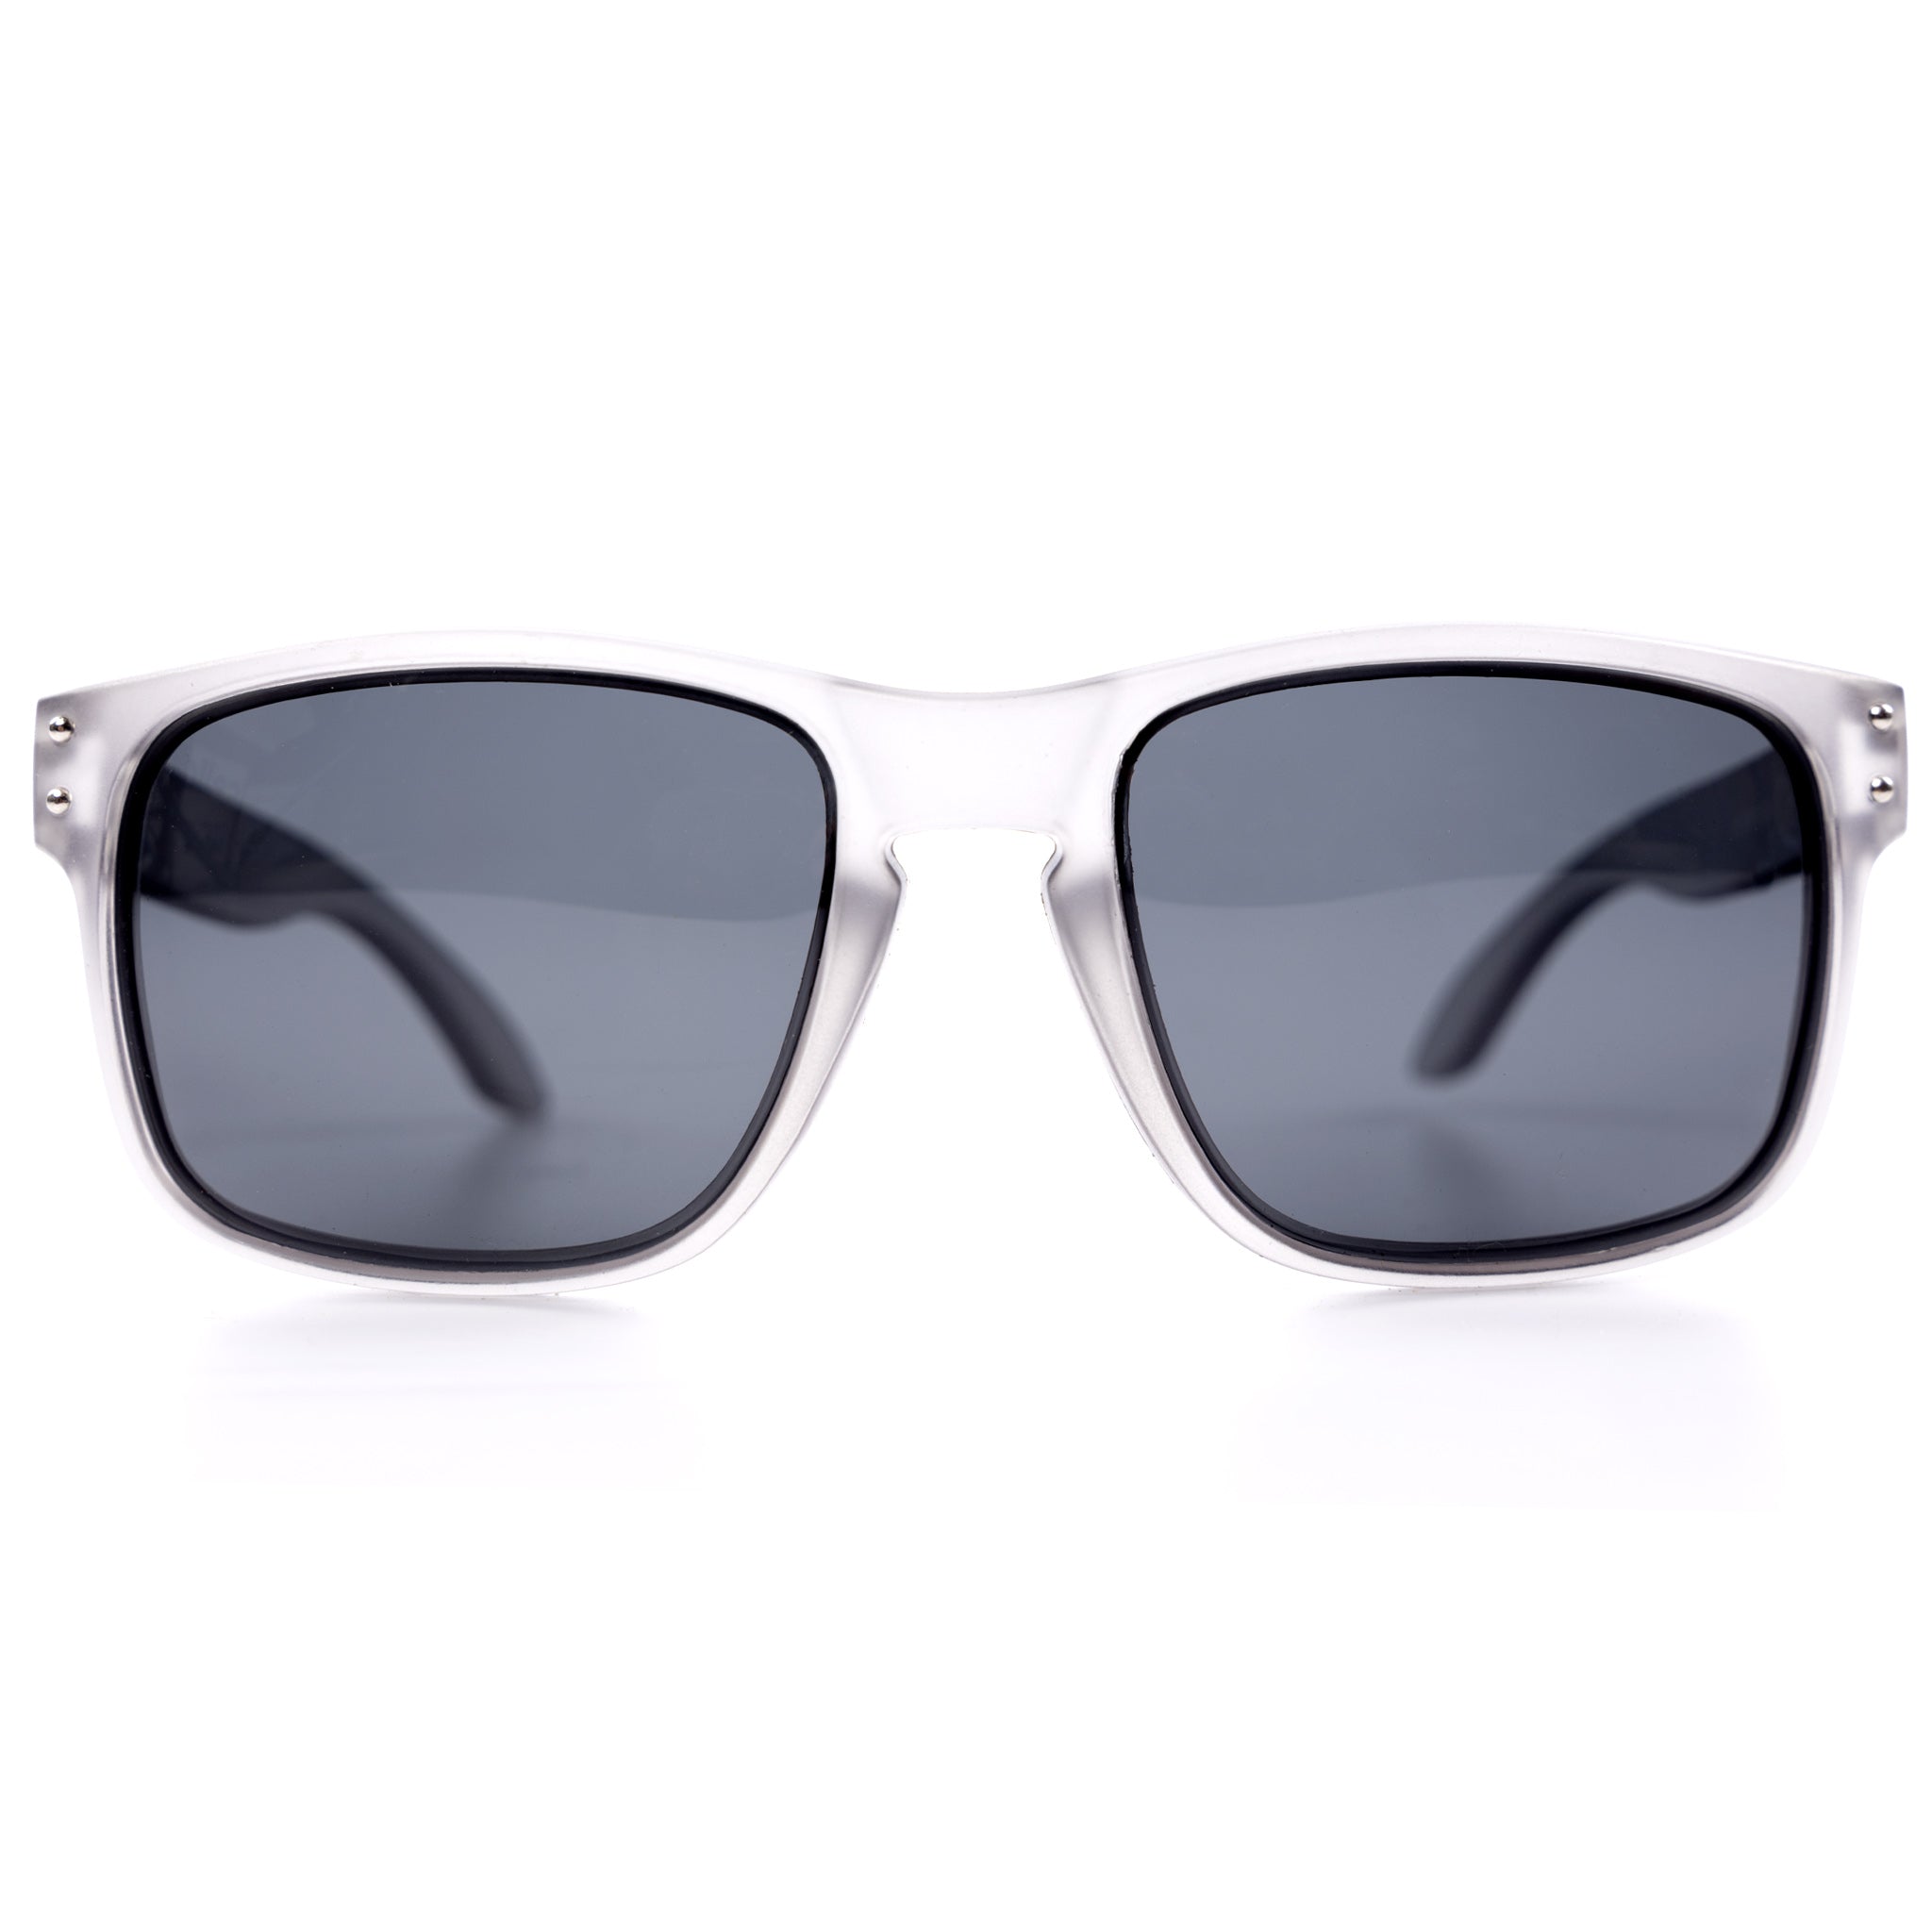 Backyard BMX Sunglasses - Clear Front | Backyard UK BMX Shop Hastings